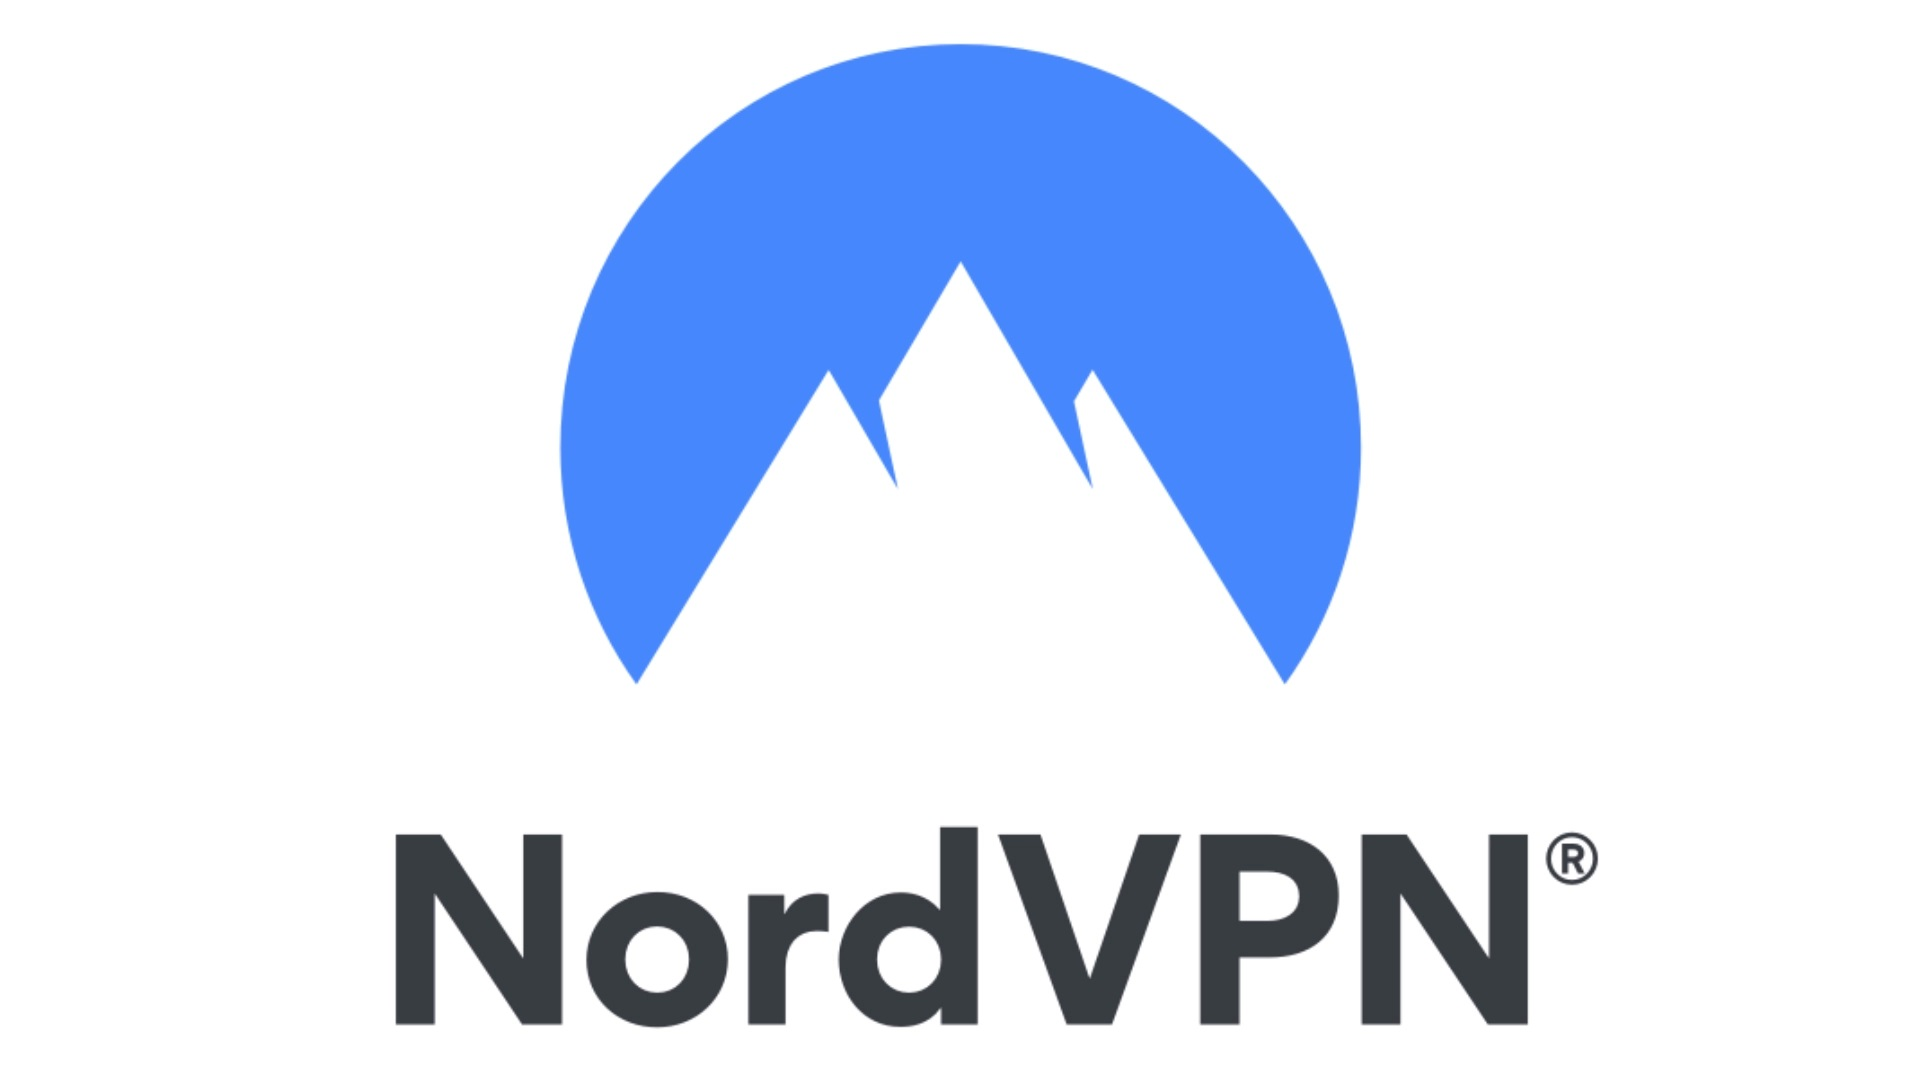 Best YouTube VPN, NordVPN, its mountainous logo is on a white background.